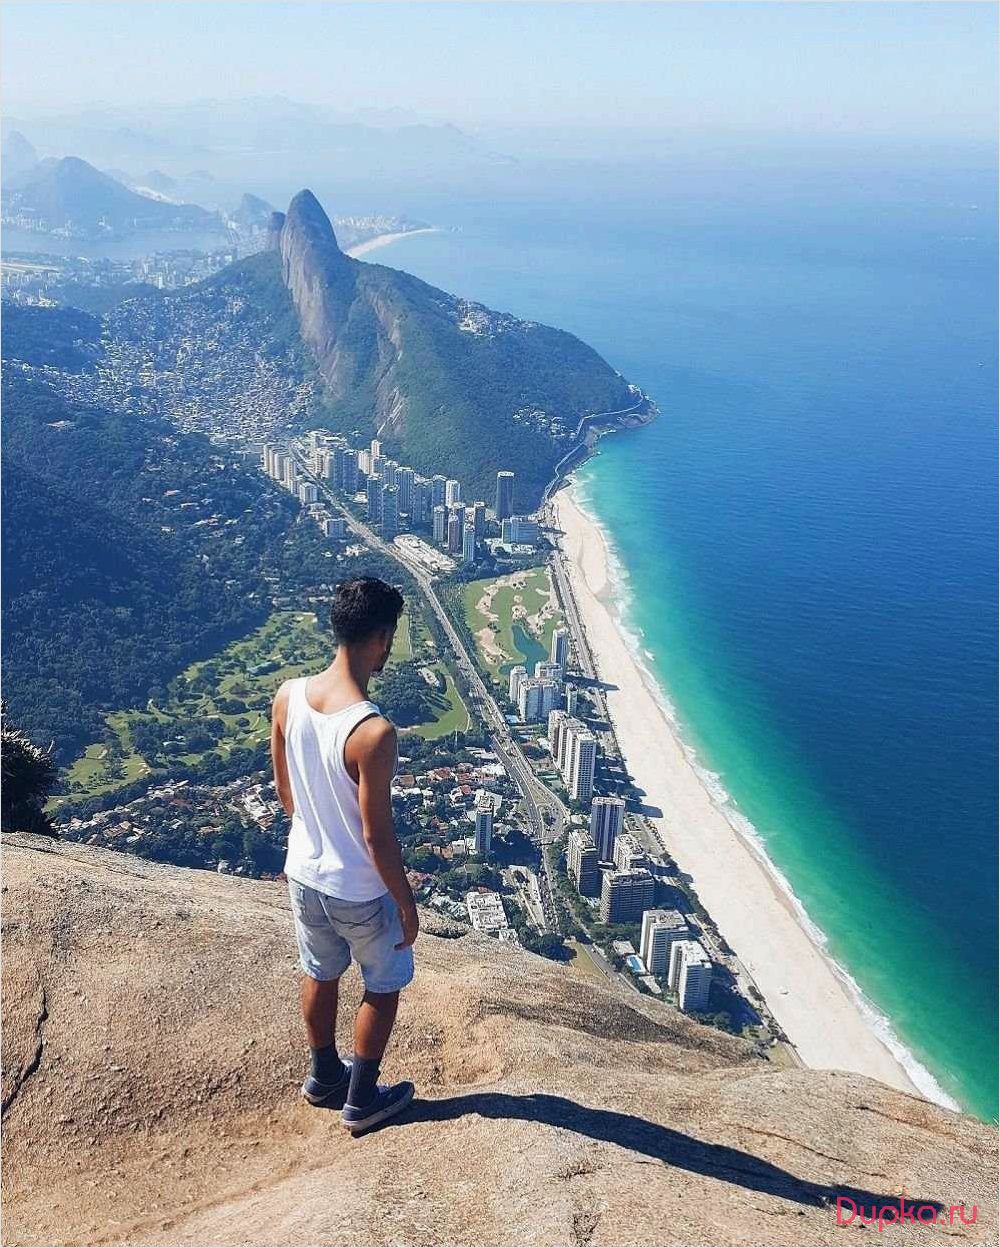 Рио-де-Жанейро — жемчужина Бразилии для туризма и путешествий